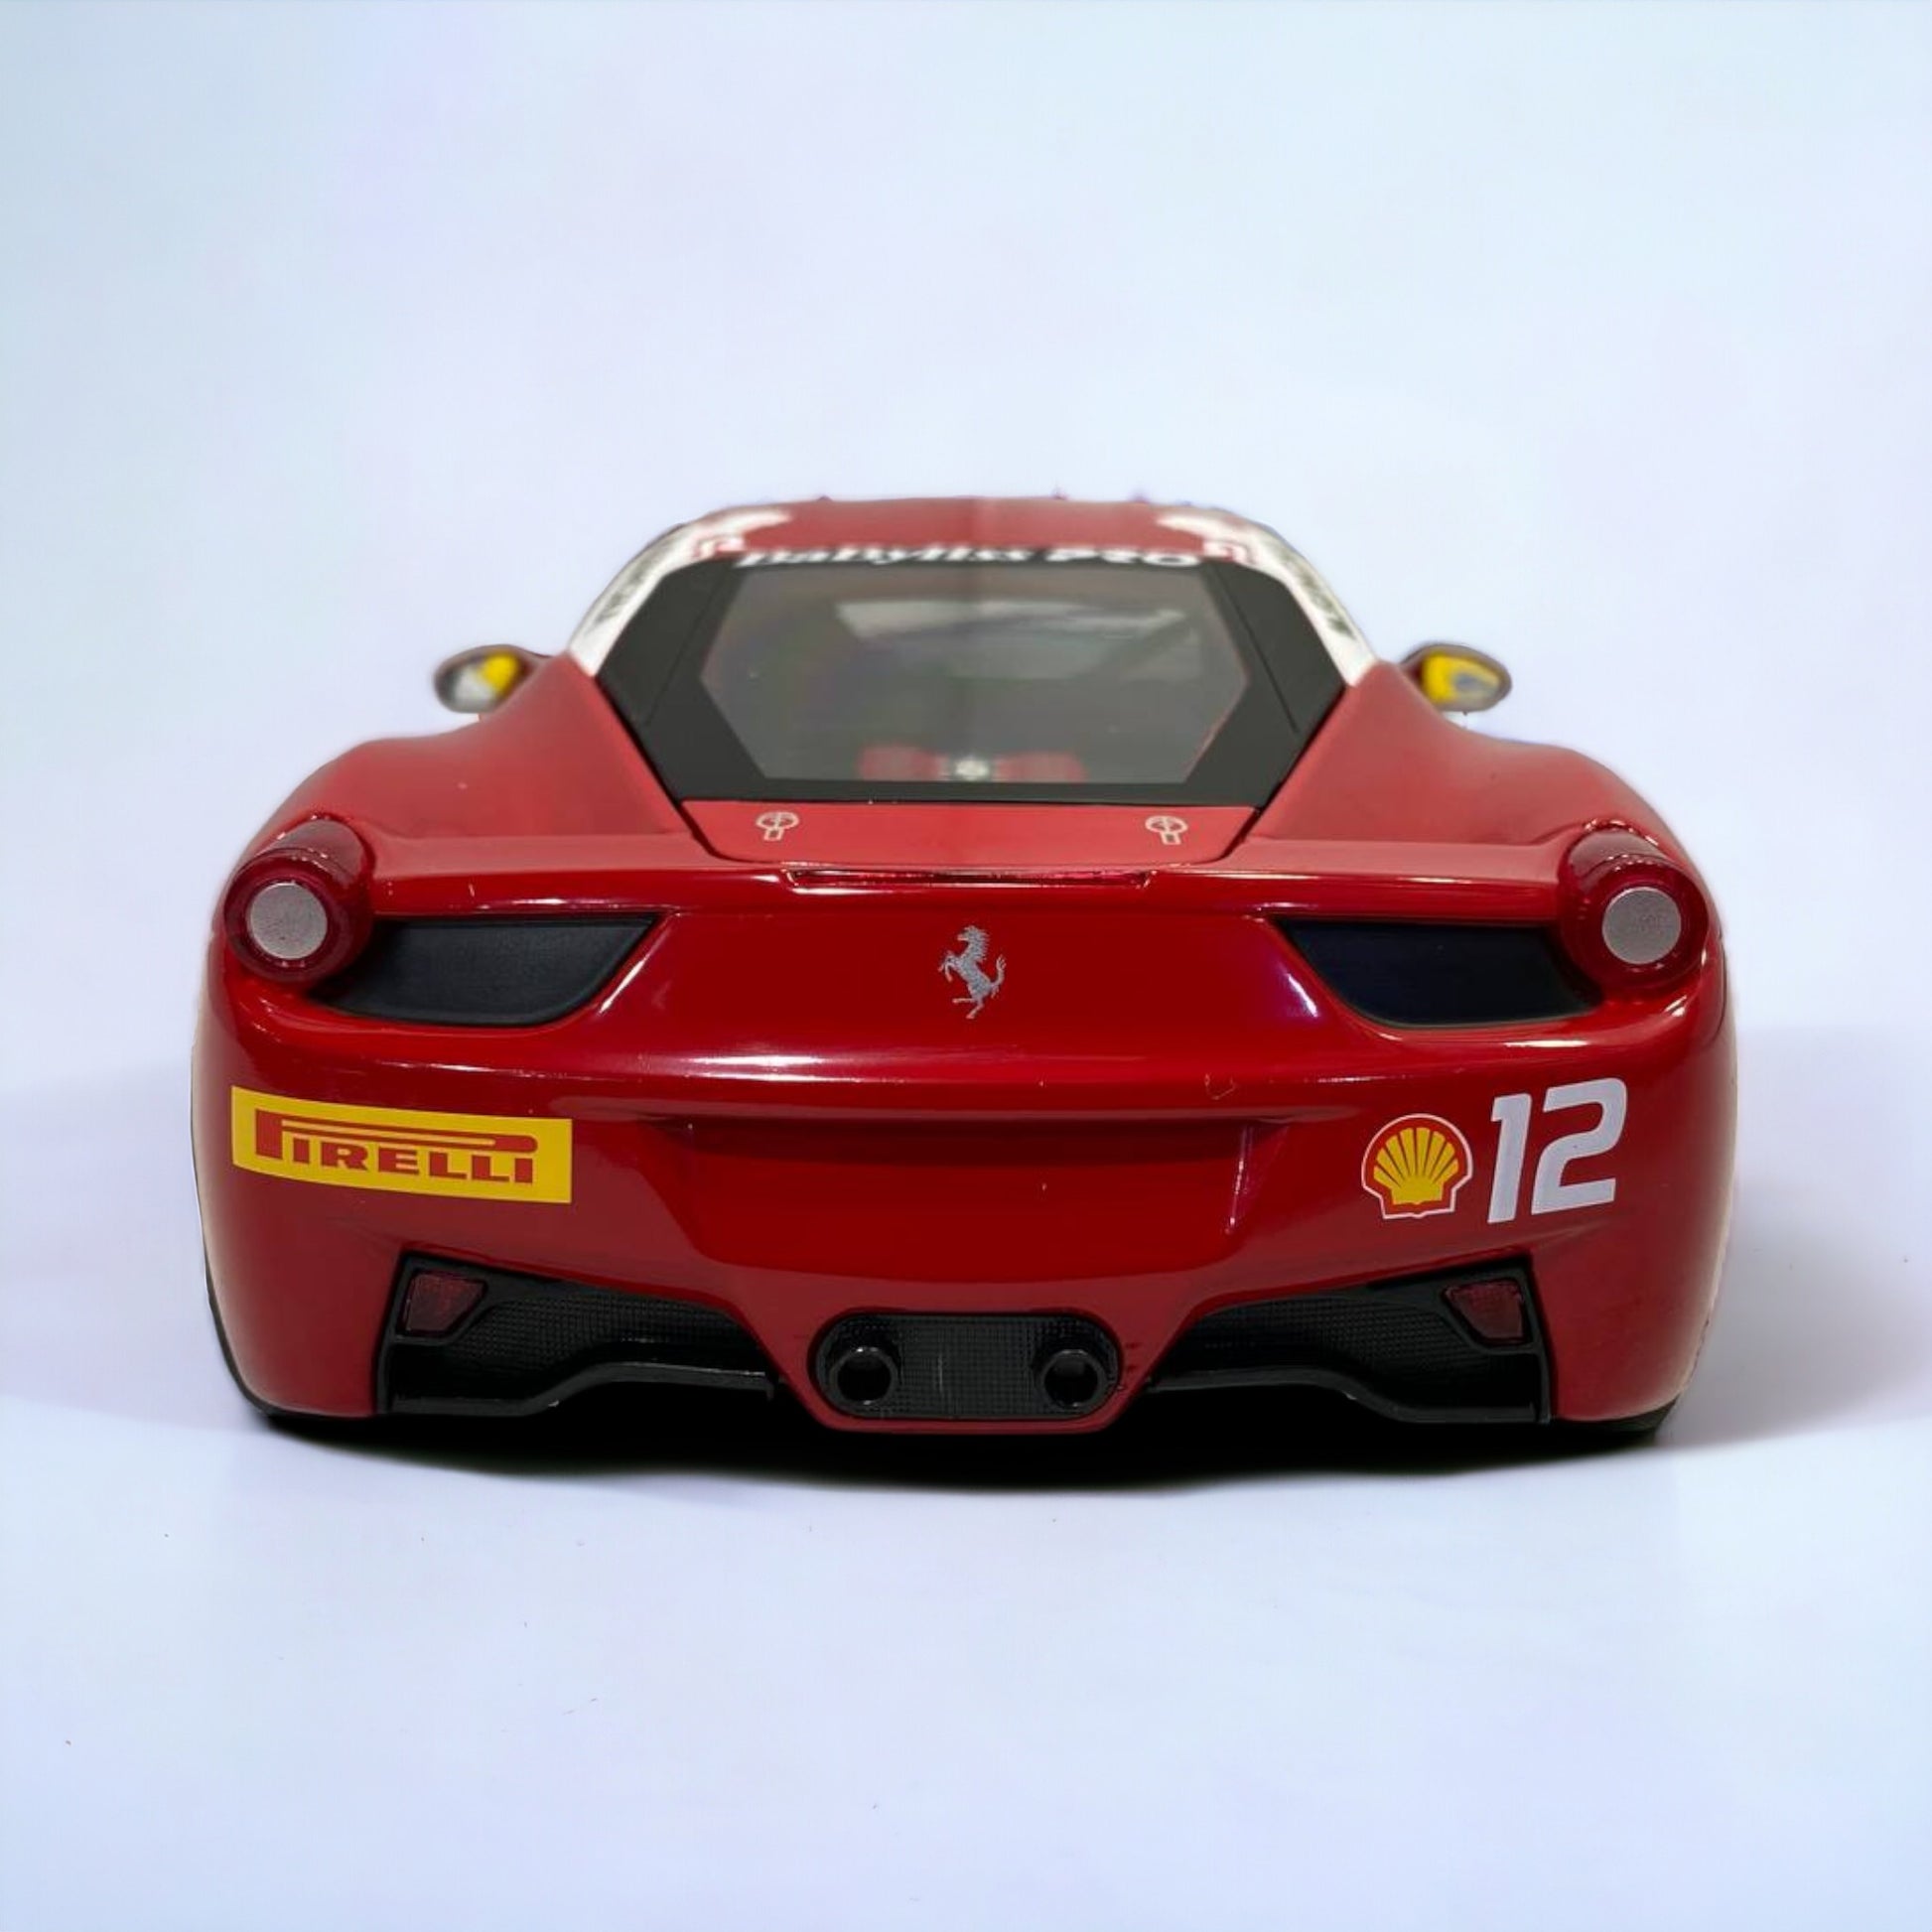 1/18 metal diecast HotWheels Ferrari 458 Challenge  Red Model Car|Sold in Dturman.com Dubai UAE.